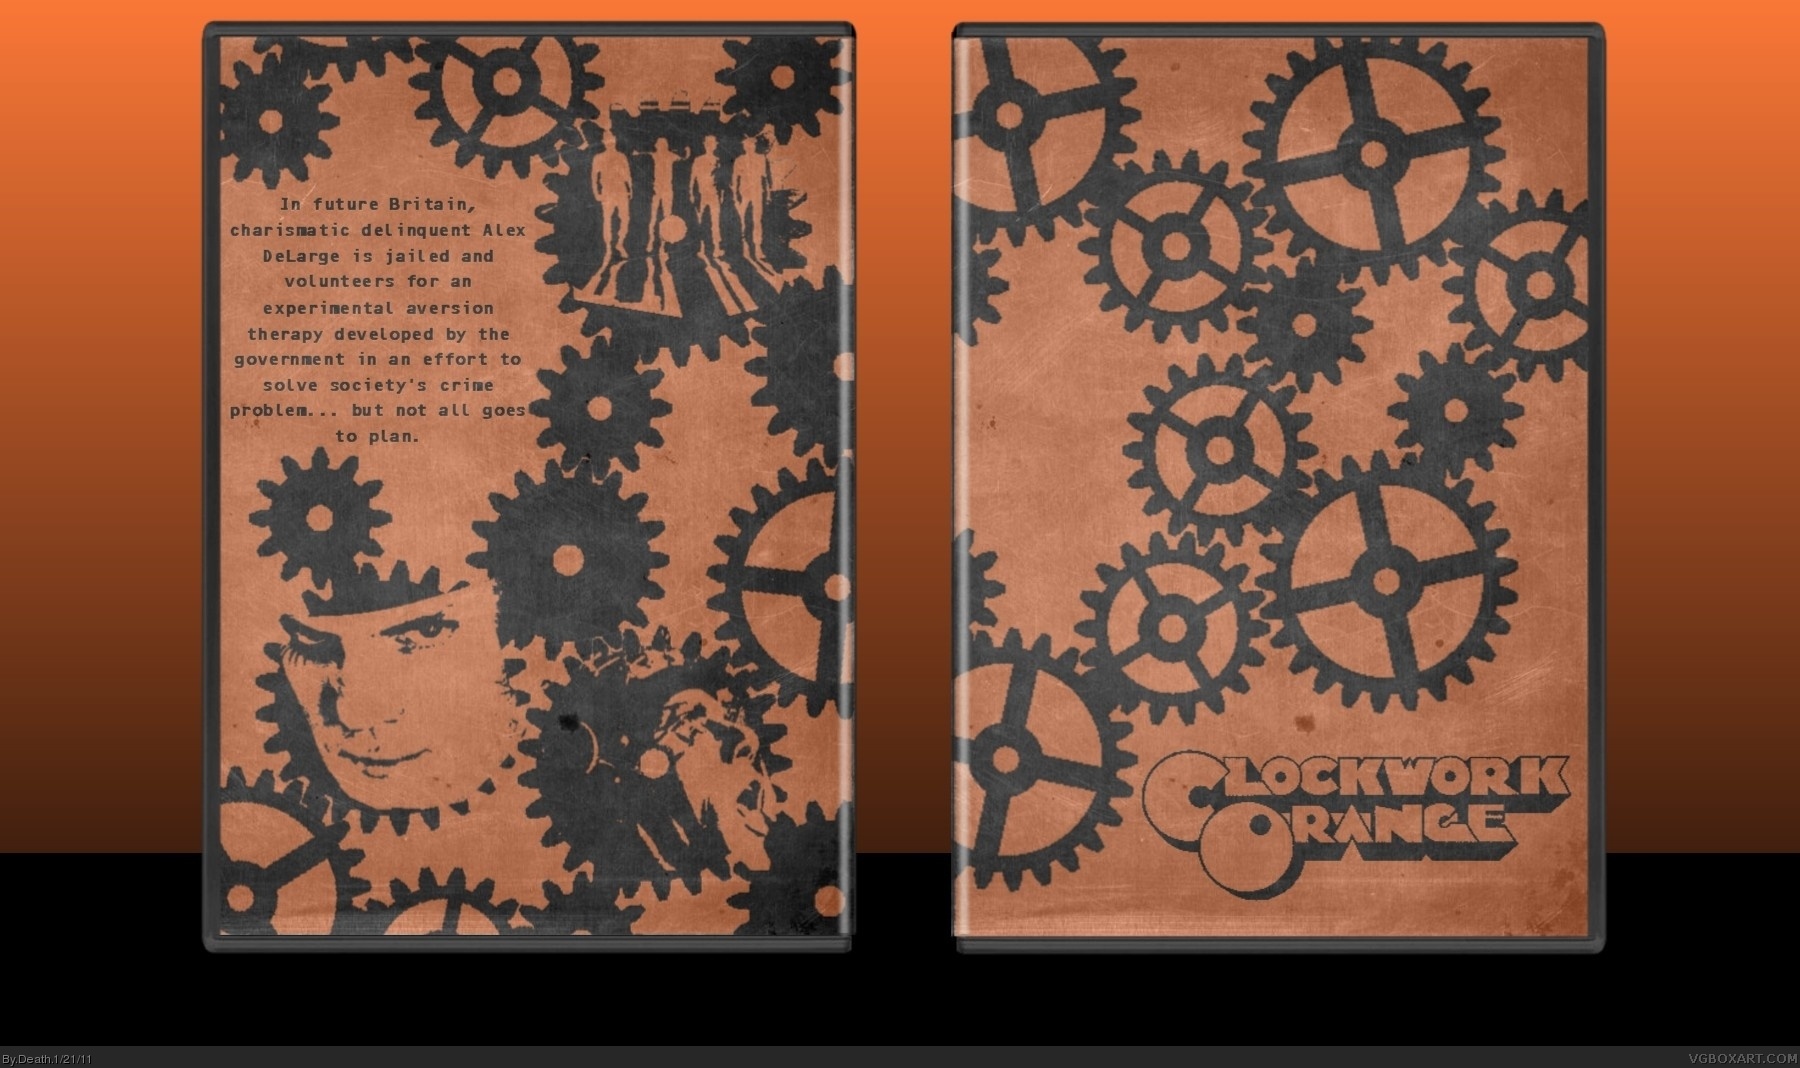 A Clockwork Orange box cover